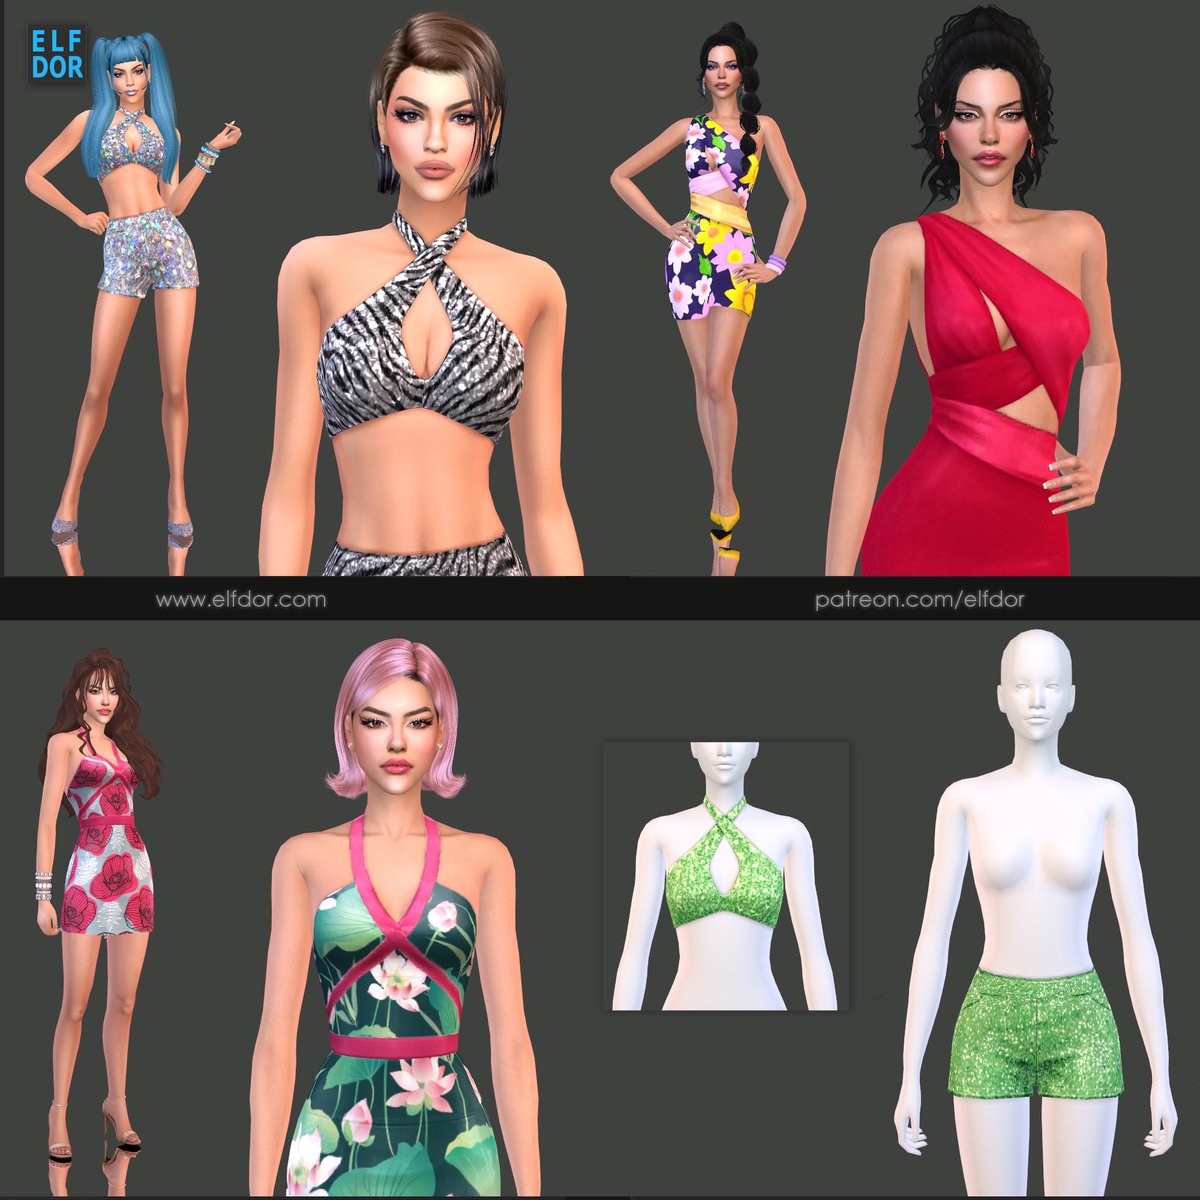 #Sims4 #TheSims4 #ts4 #ts4cc #s4cc #sims4cc #Sims4Clothes #ts4cc #s4cc #thesims4clothes #Sims4Cc #ts4clothes #ts4gowns #ts4dress #ts4dresses #accessoires #sims4accessoires elfdor.com Patreon Content